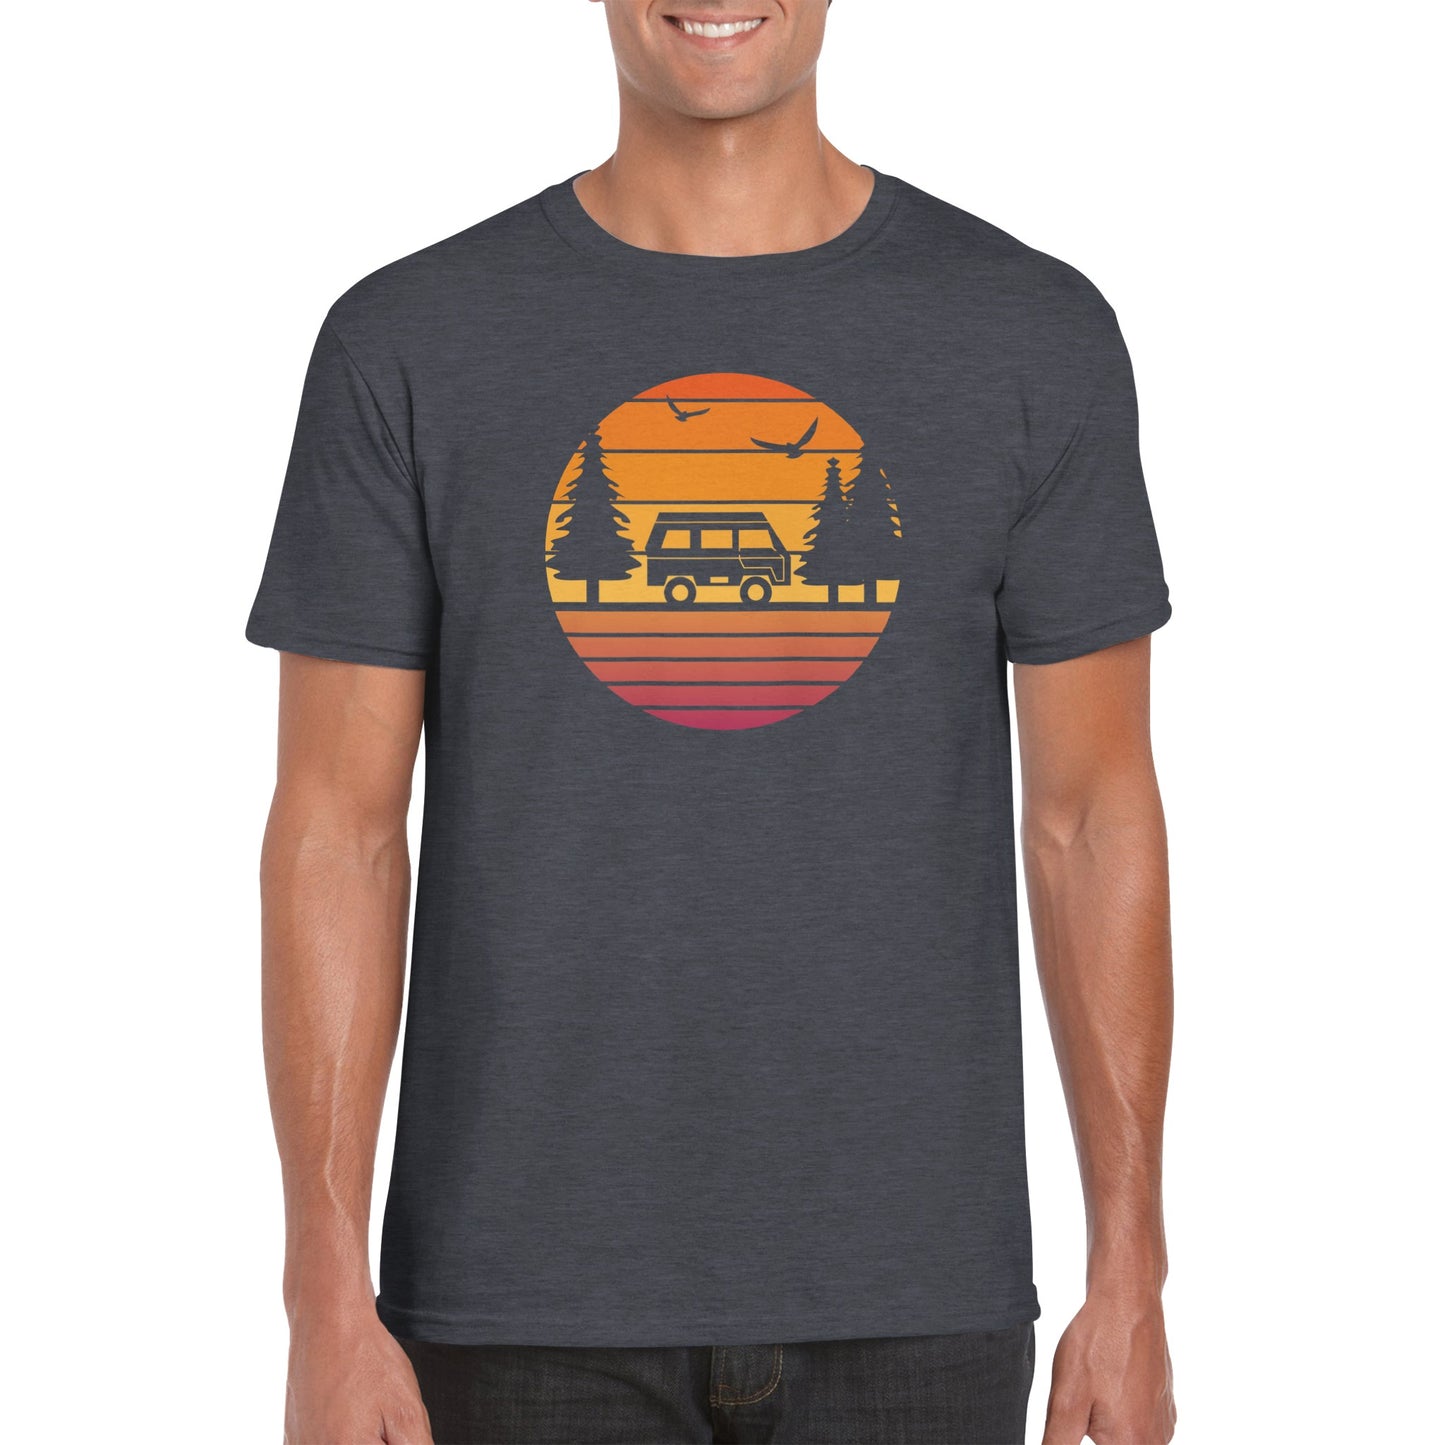 Camping Van Scene Silhouette - Classic Unisex Crewneck T-shirt